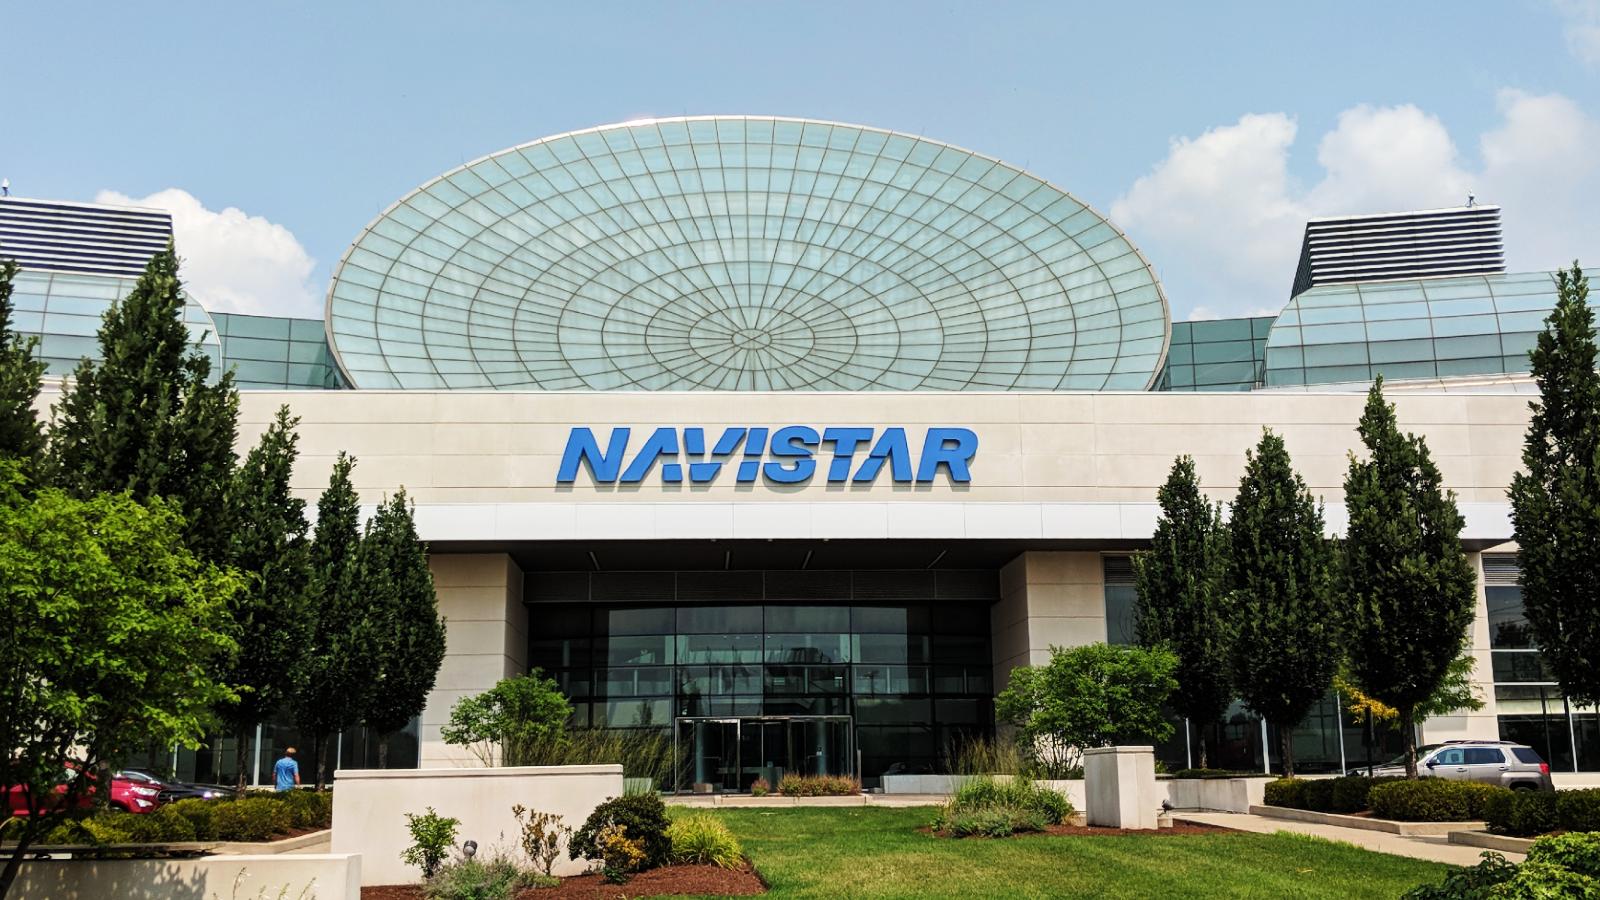 US truck and military vehicle maker Navistar discloses data breach